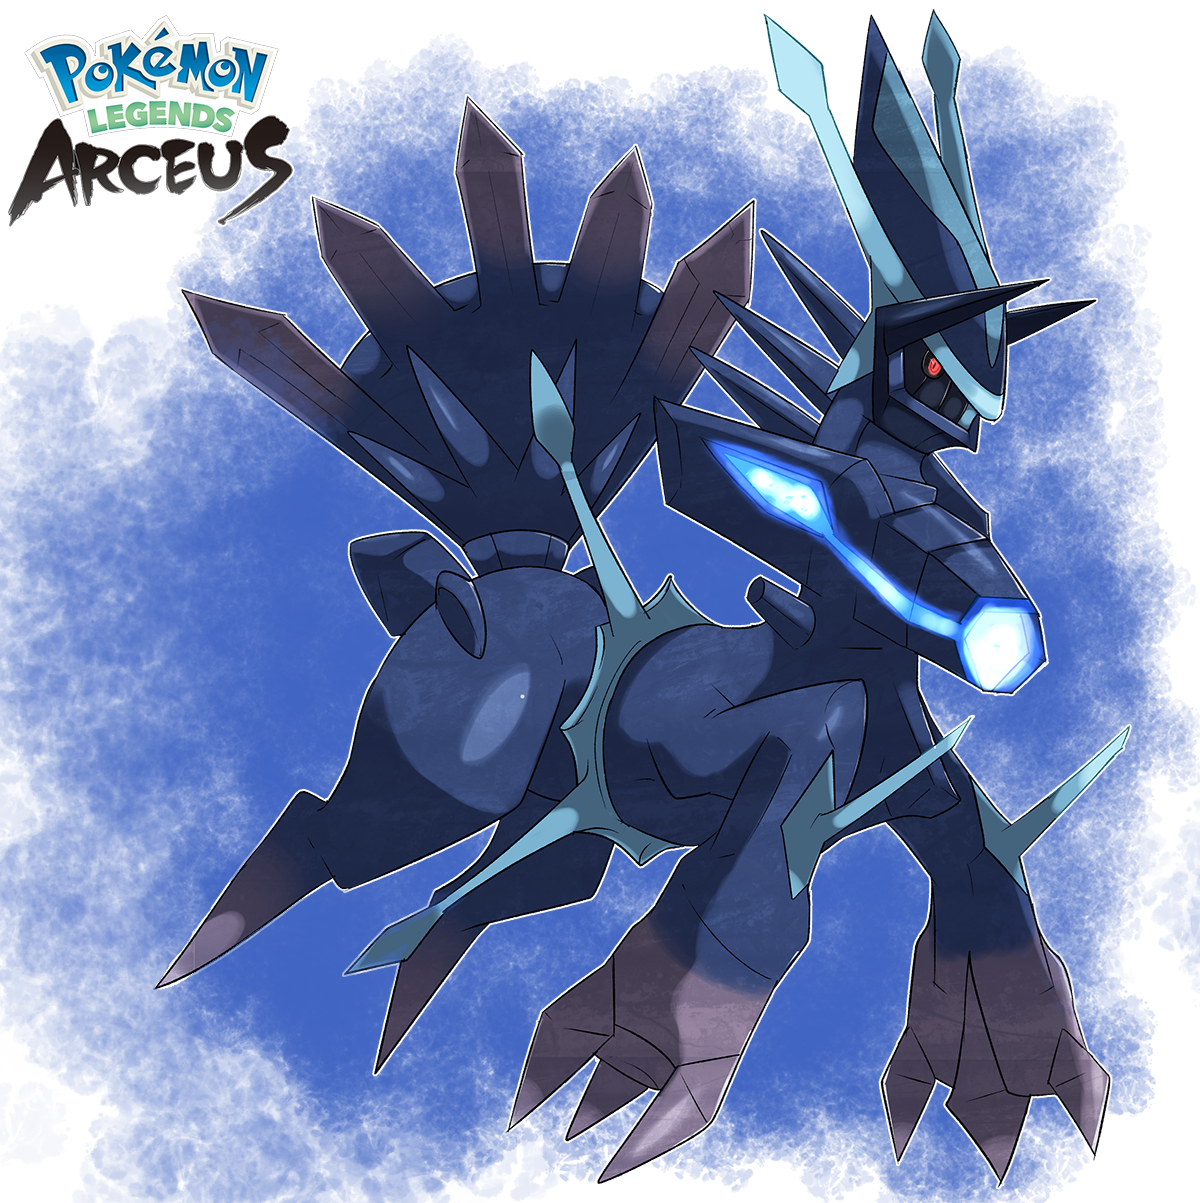 How To Get Palkia And Dialga's Origin Forms In Pokemon Legends: Arceus